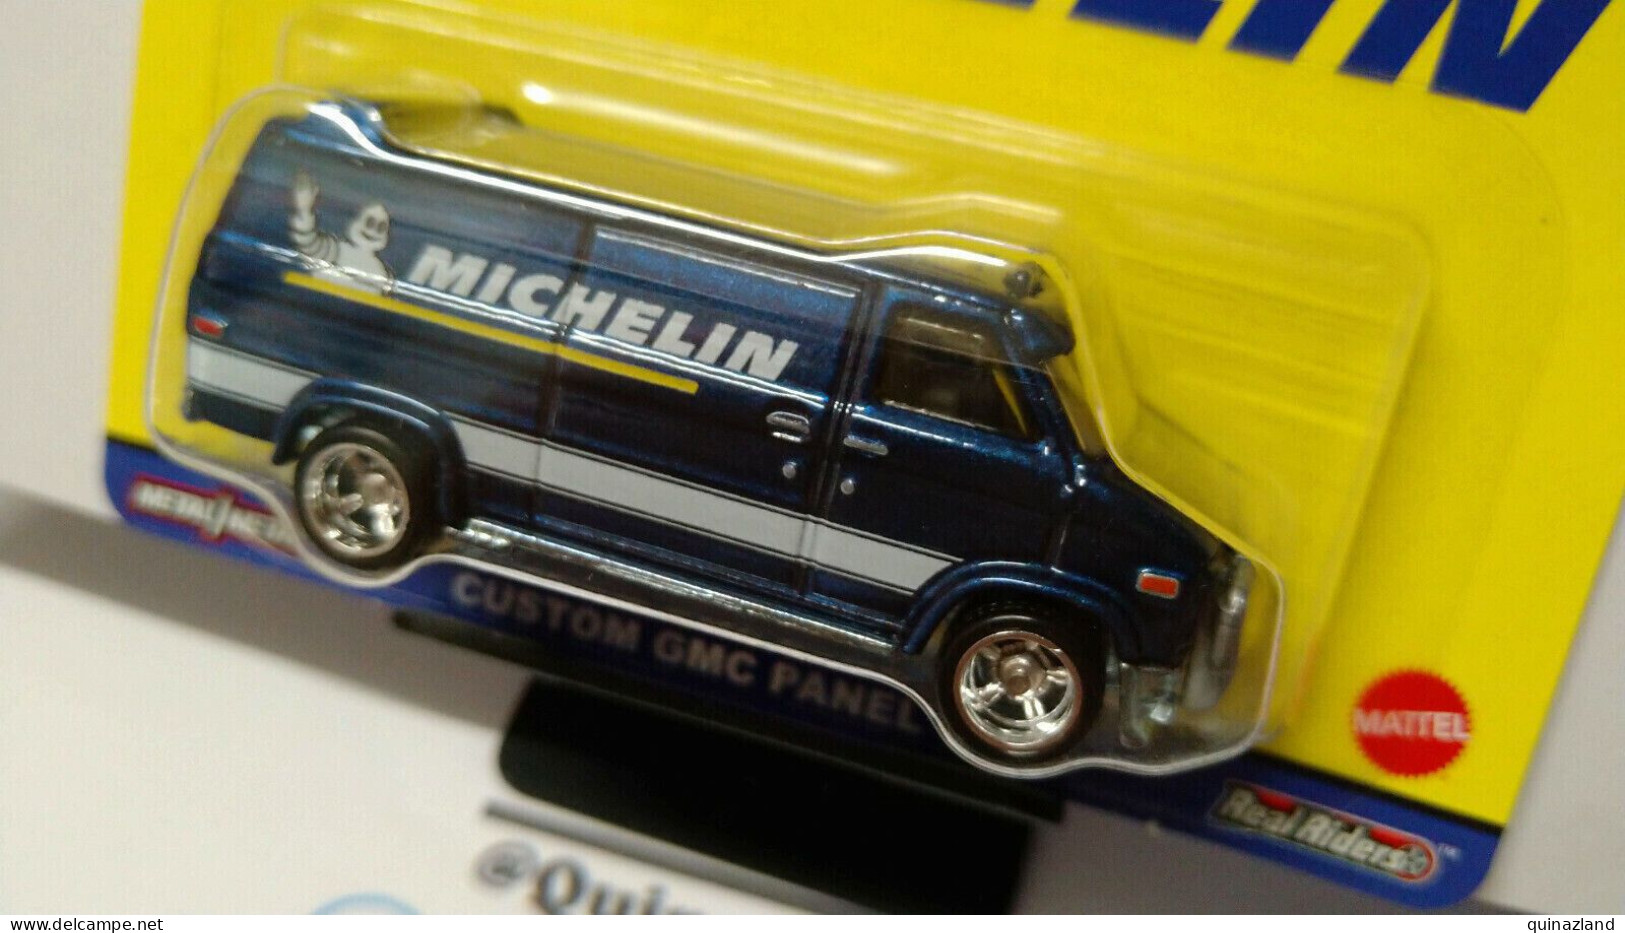 Hot Wheels 2021 Speed Shop Custom GMC Panel Van Michelin (NG154) - Majorette